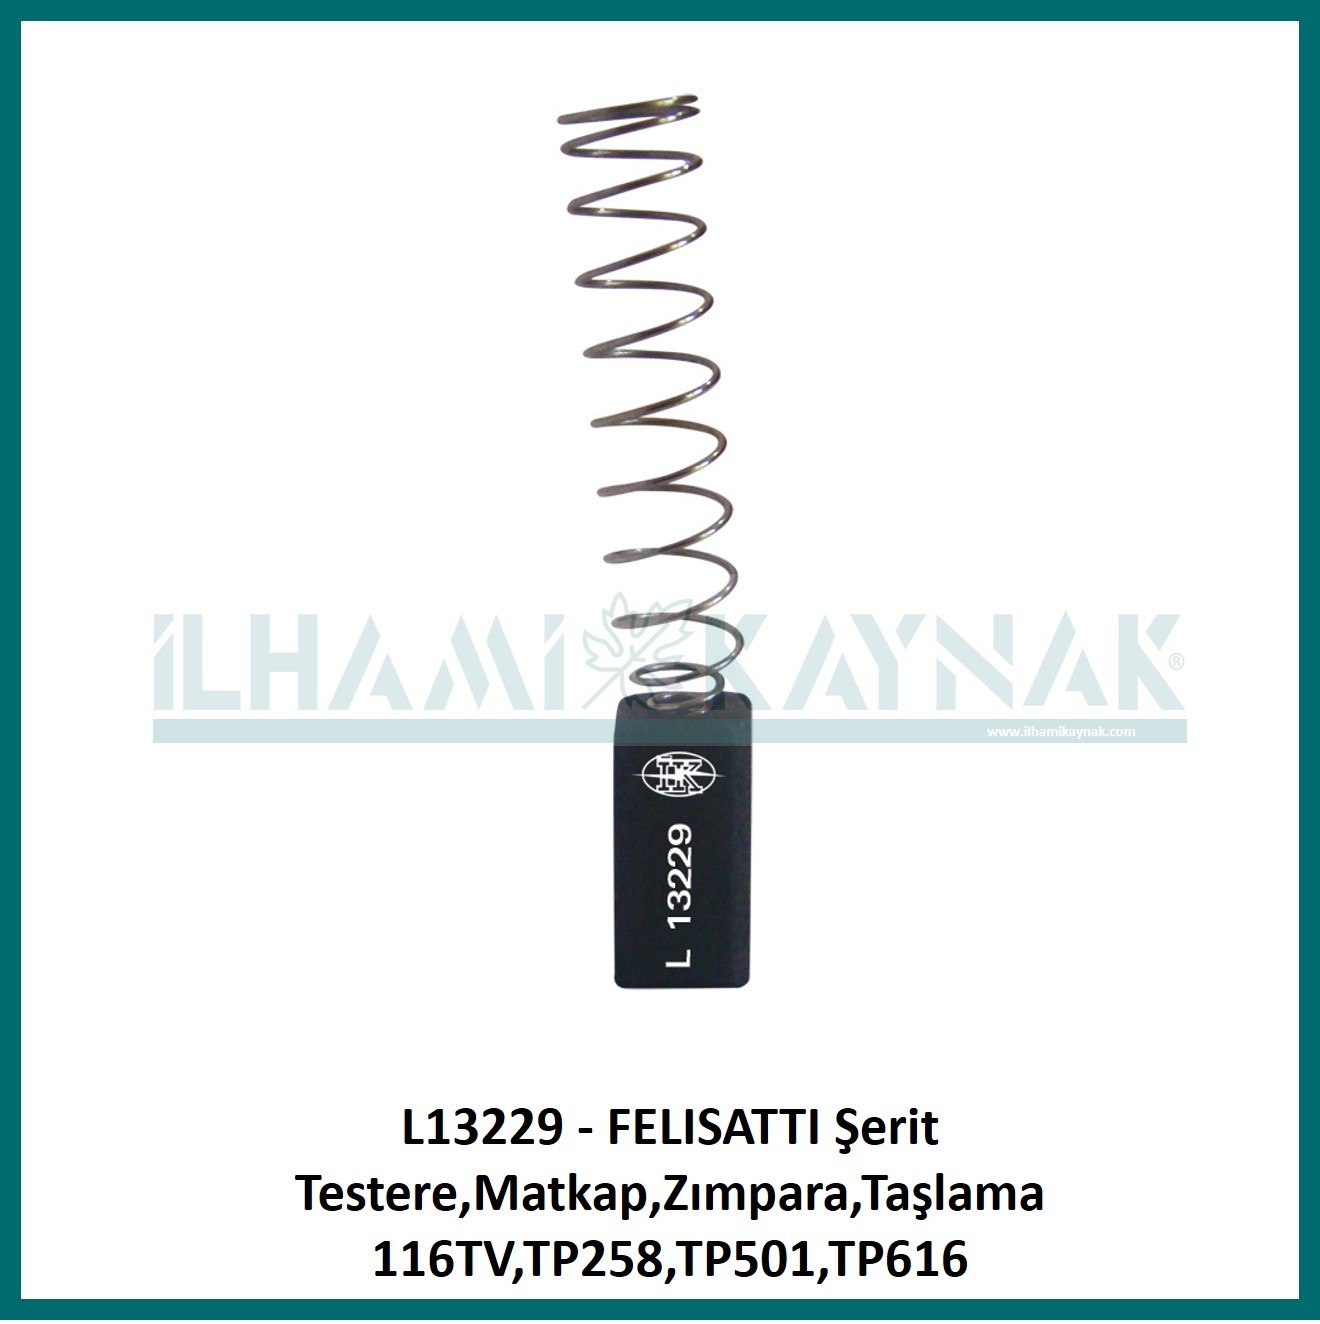 L13229 - FELISATTI Şerit Testere,Matkap,Zımpara,Taşlama, WÜRTH , AEG , BLACK&DECKER 116TV,TP258,TP501,TP616  - 6.3*6.3*13 mm - 100 Adet